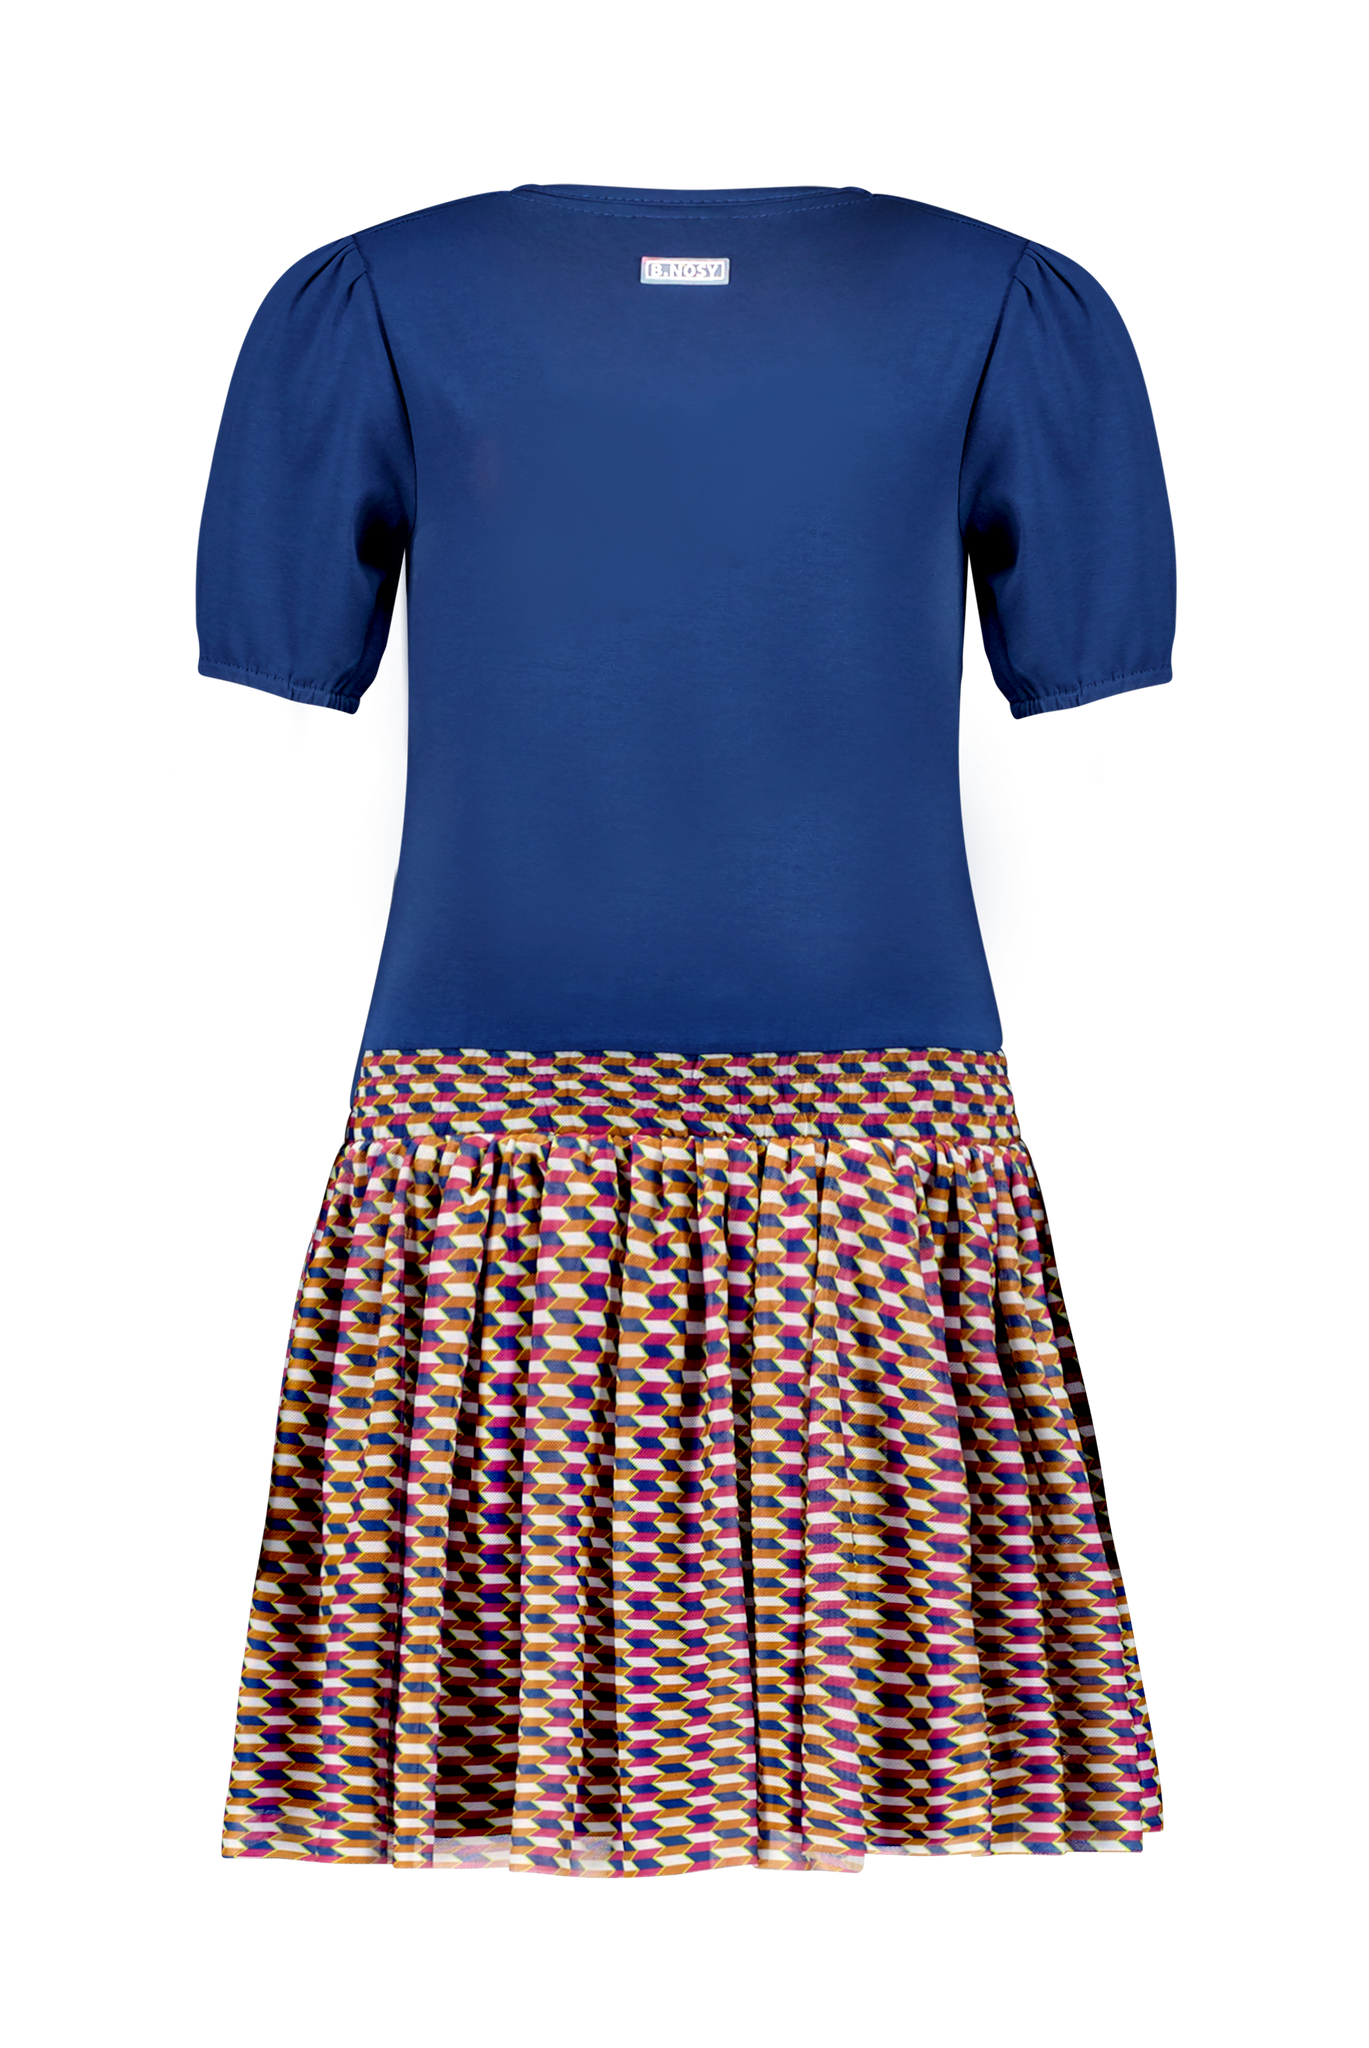 Girls dress with puffed sleeves and retro ao mesh skirt + belt